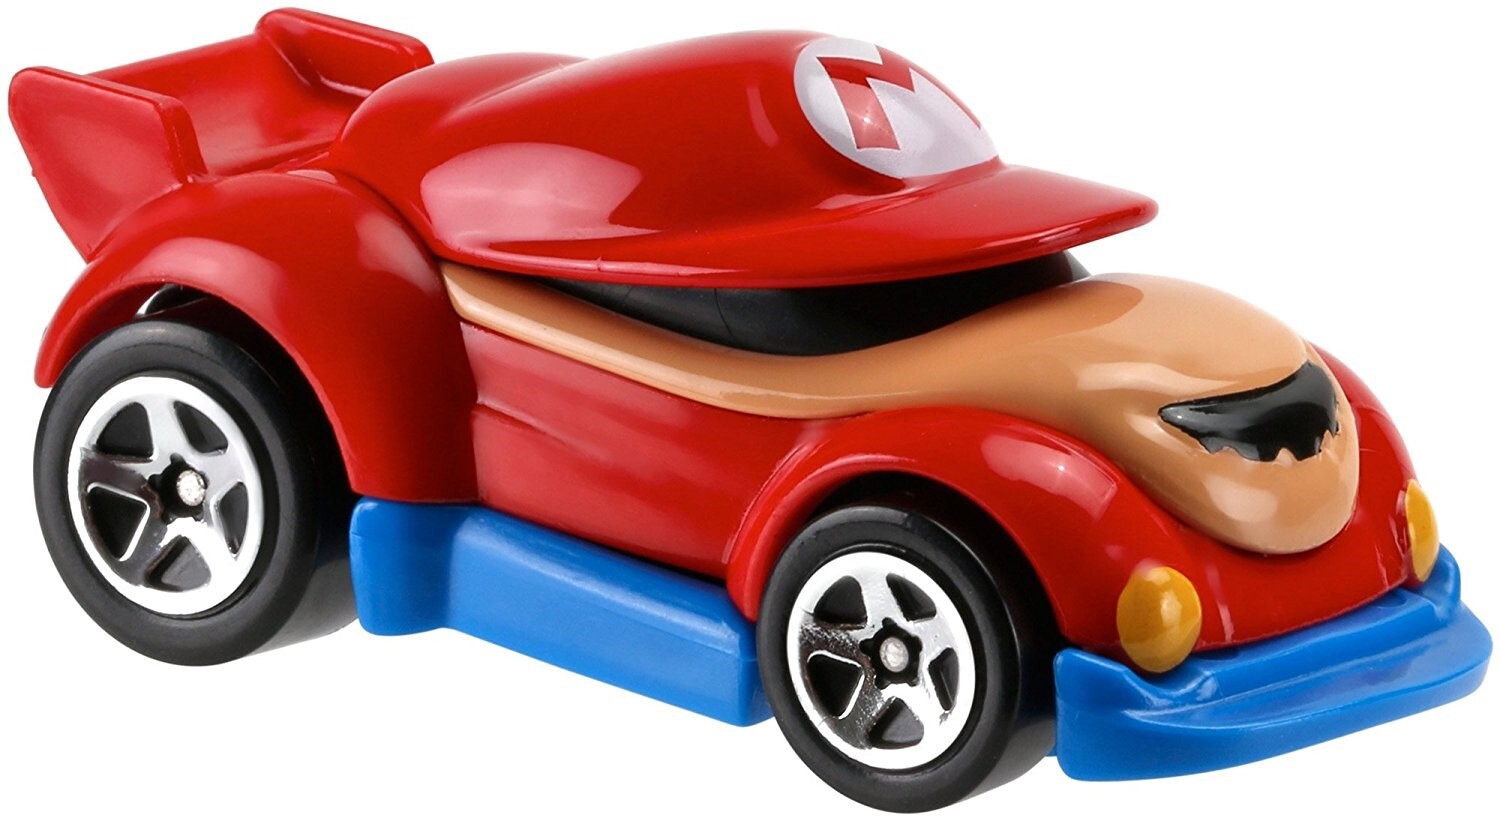 Hot Wheels Character Cars Super Mario - Mario